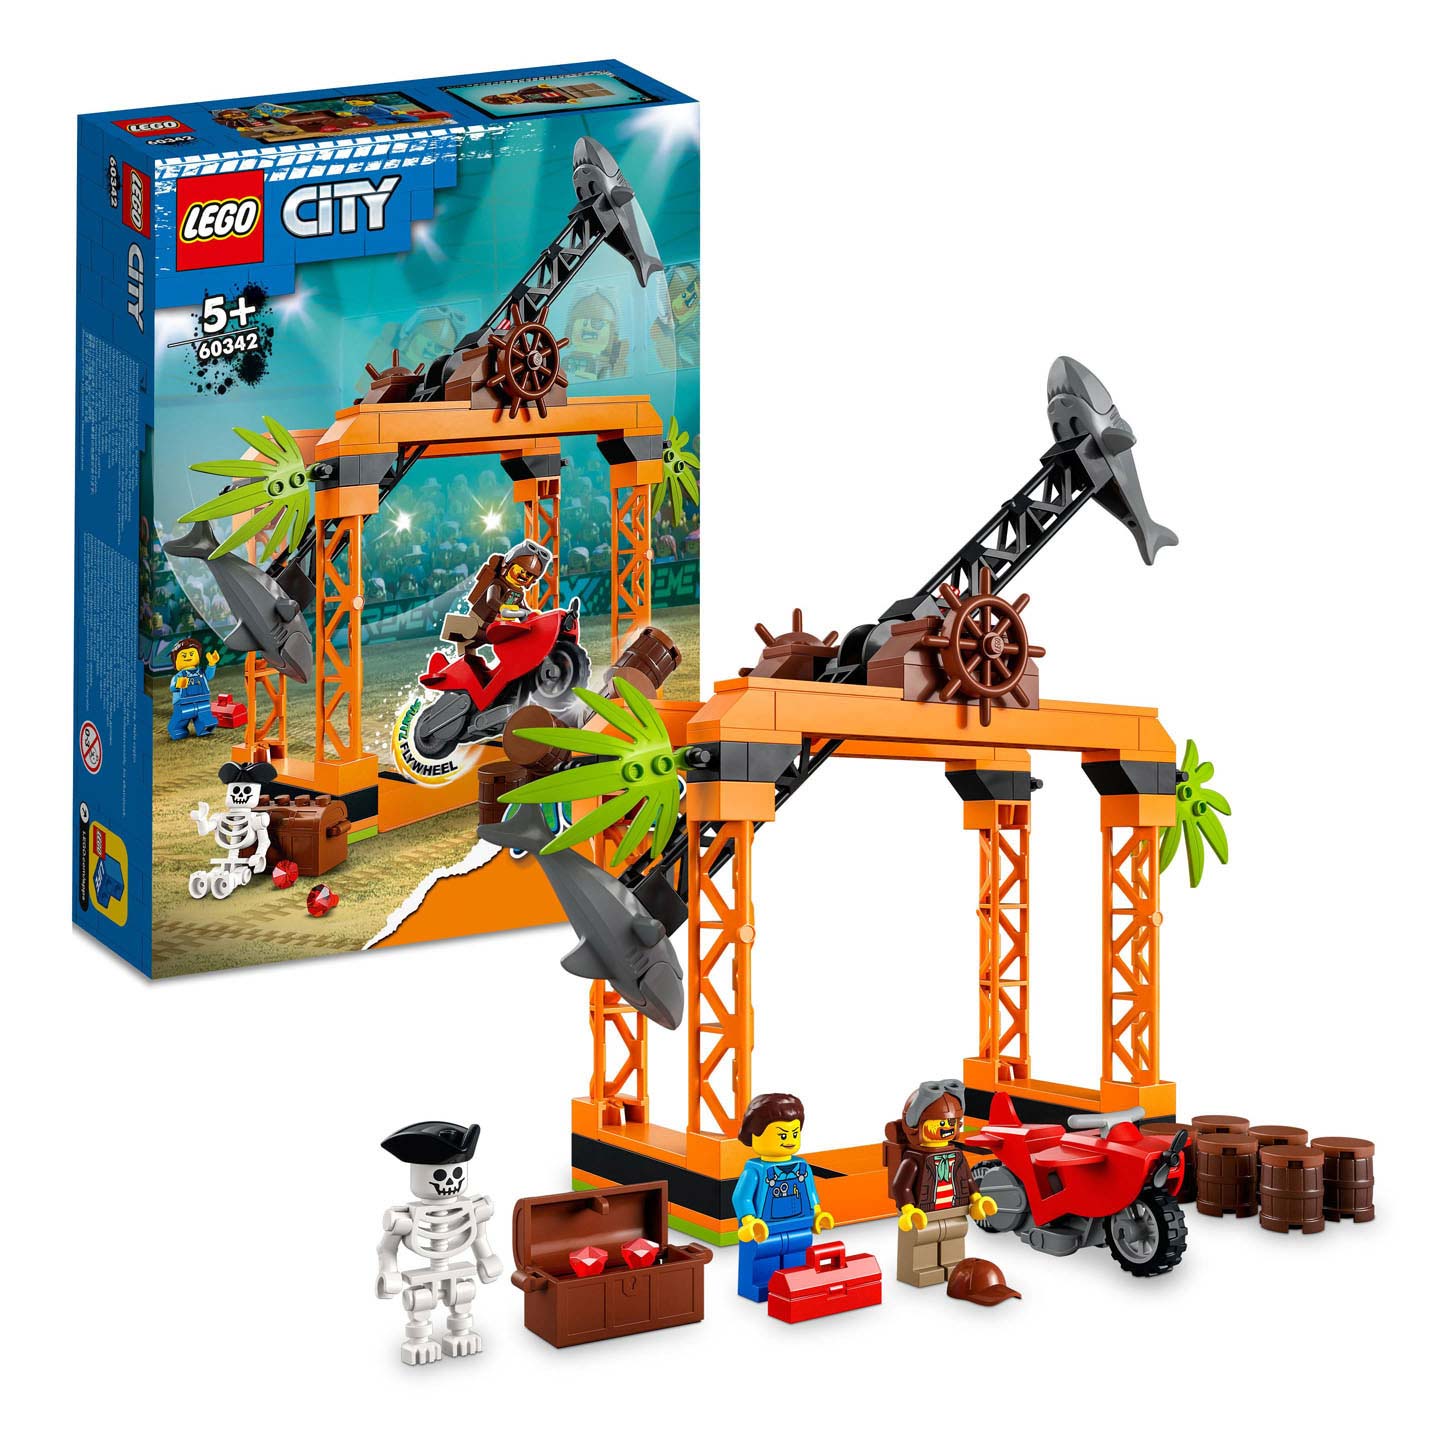 Lego LEGO City 60342 The Shark Attack Stunt Uitdaging